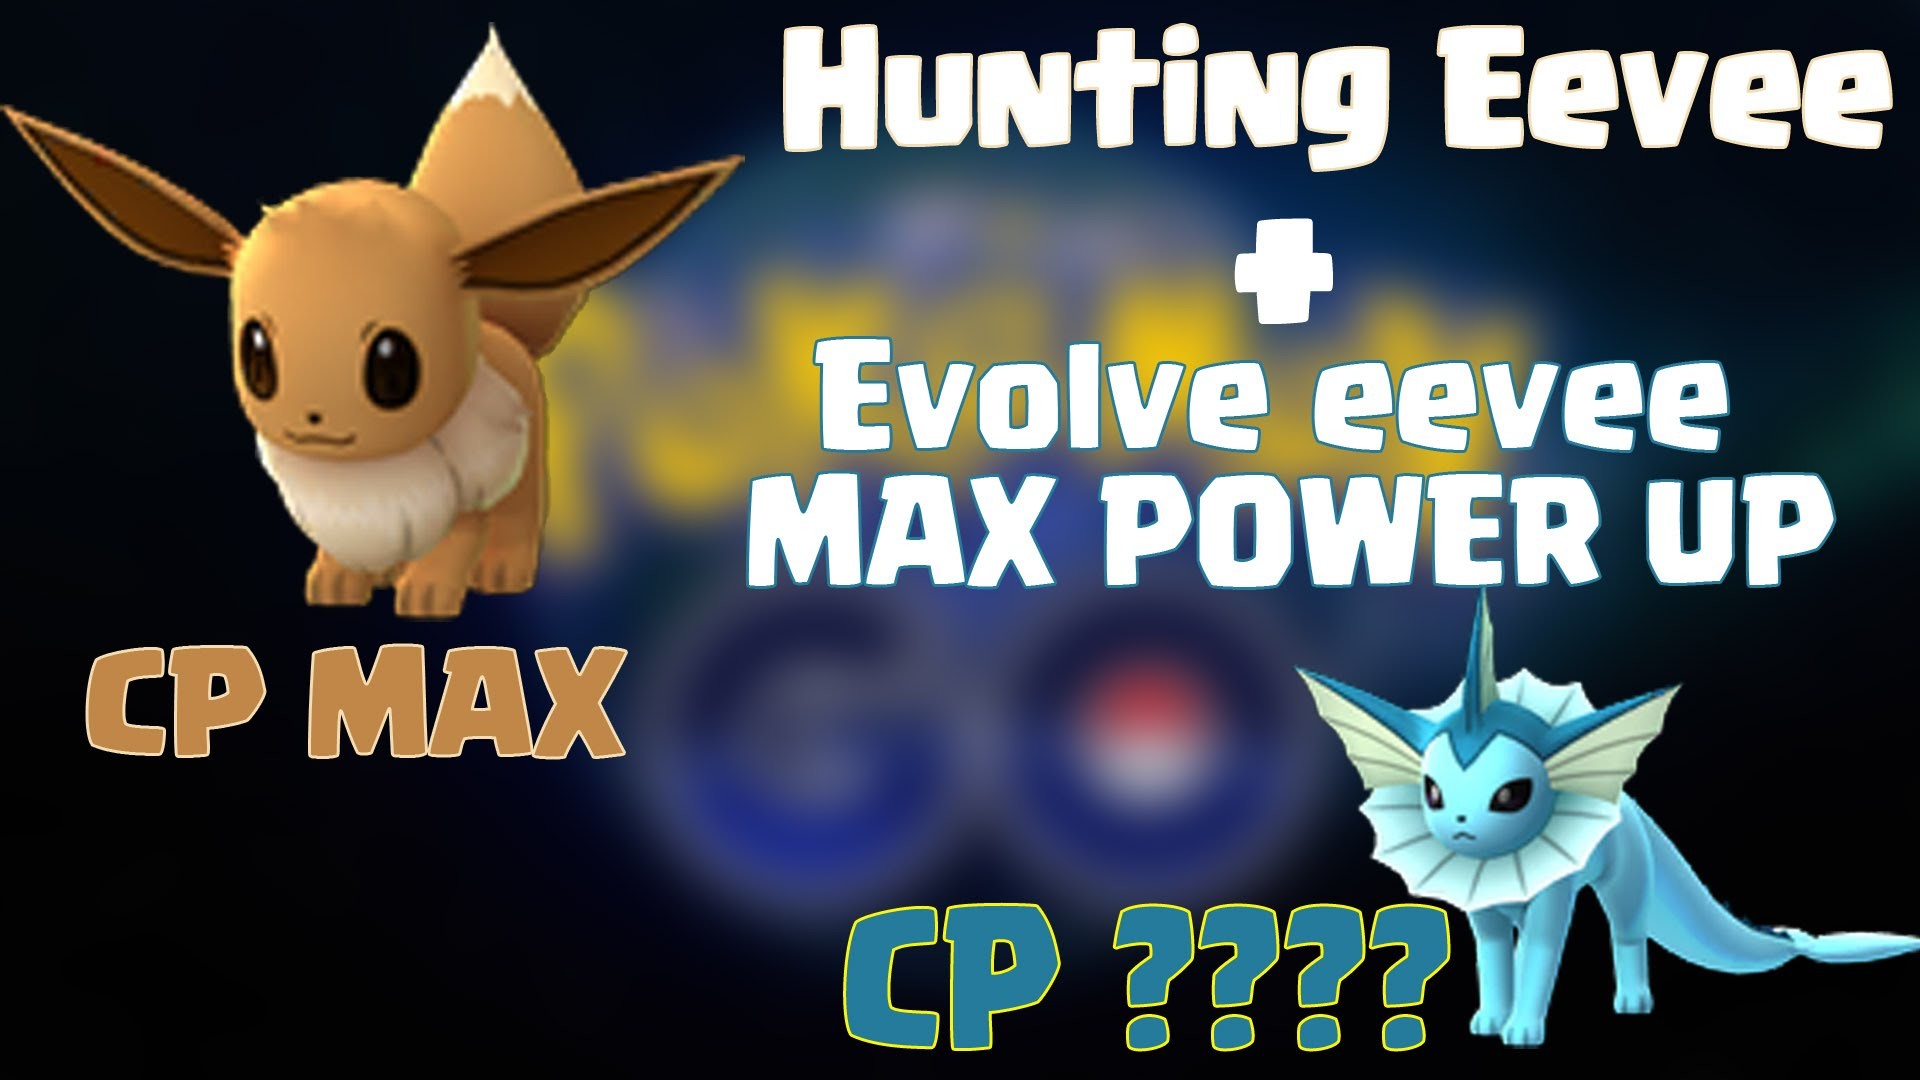 1920x1080 Main Pokemon Go di NOX - Hunting Eevee + Evolve eevee CP MAX | Pokemon Go  Indonesia - YouTube